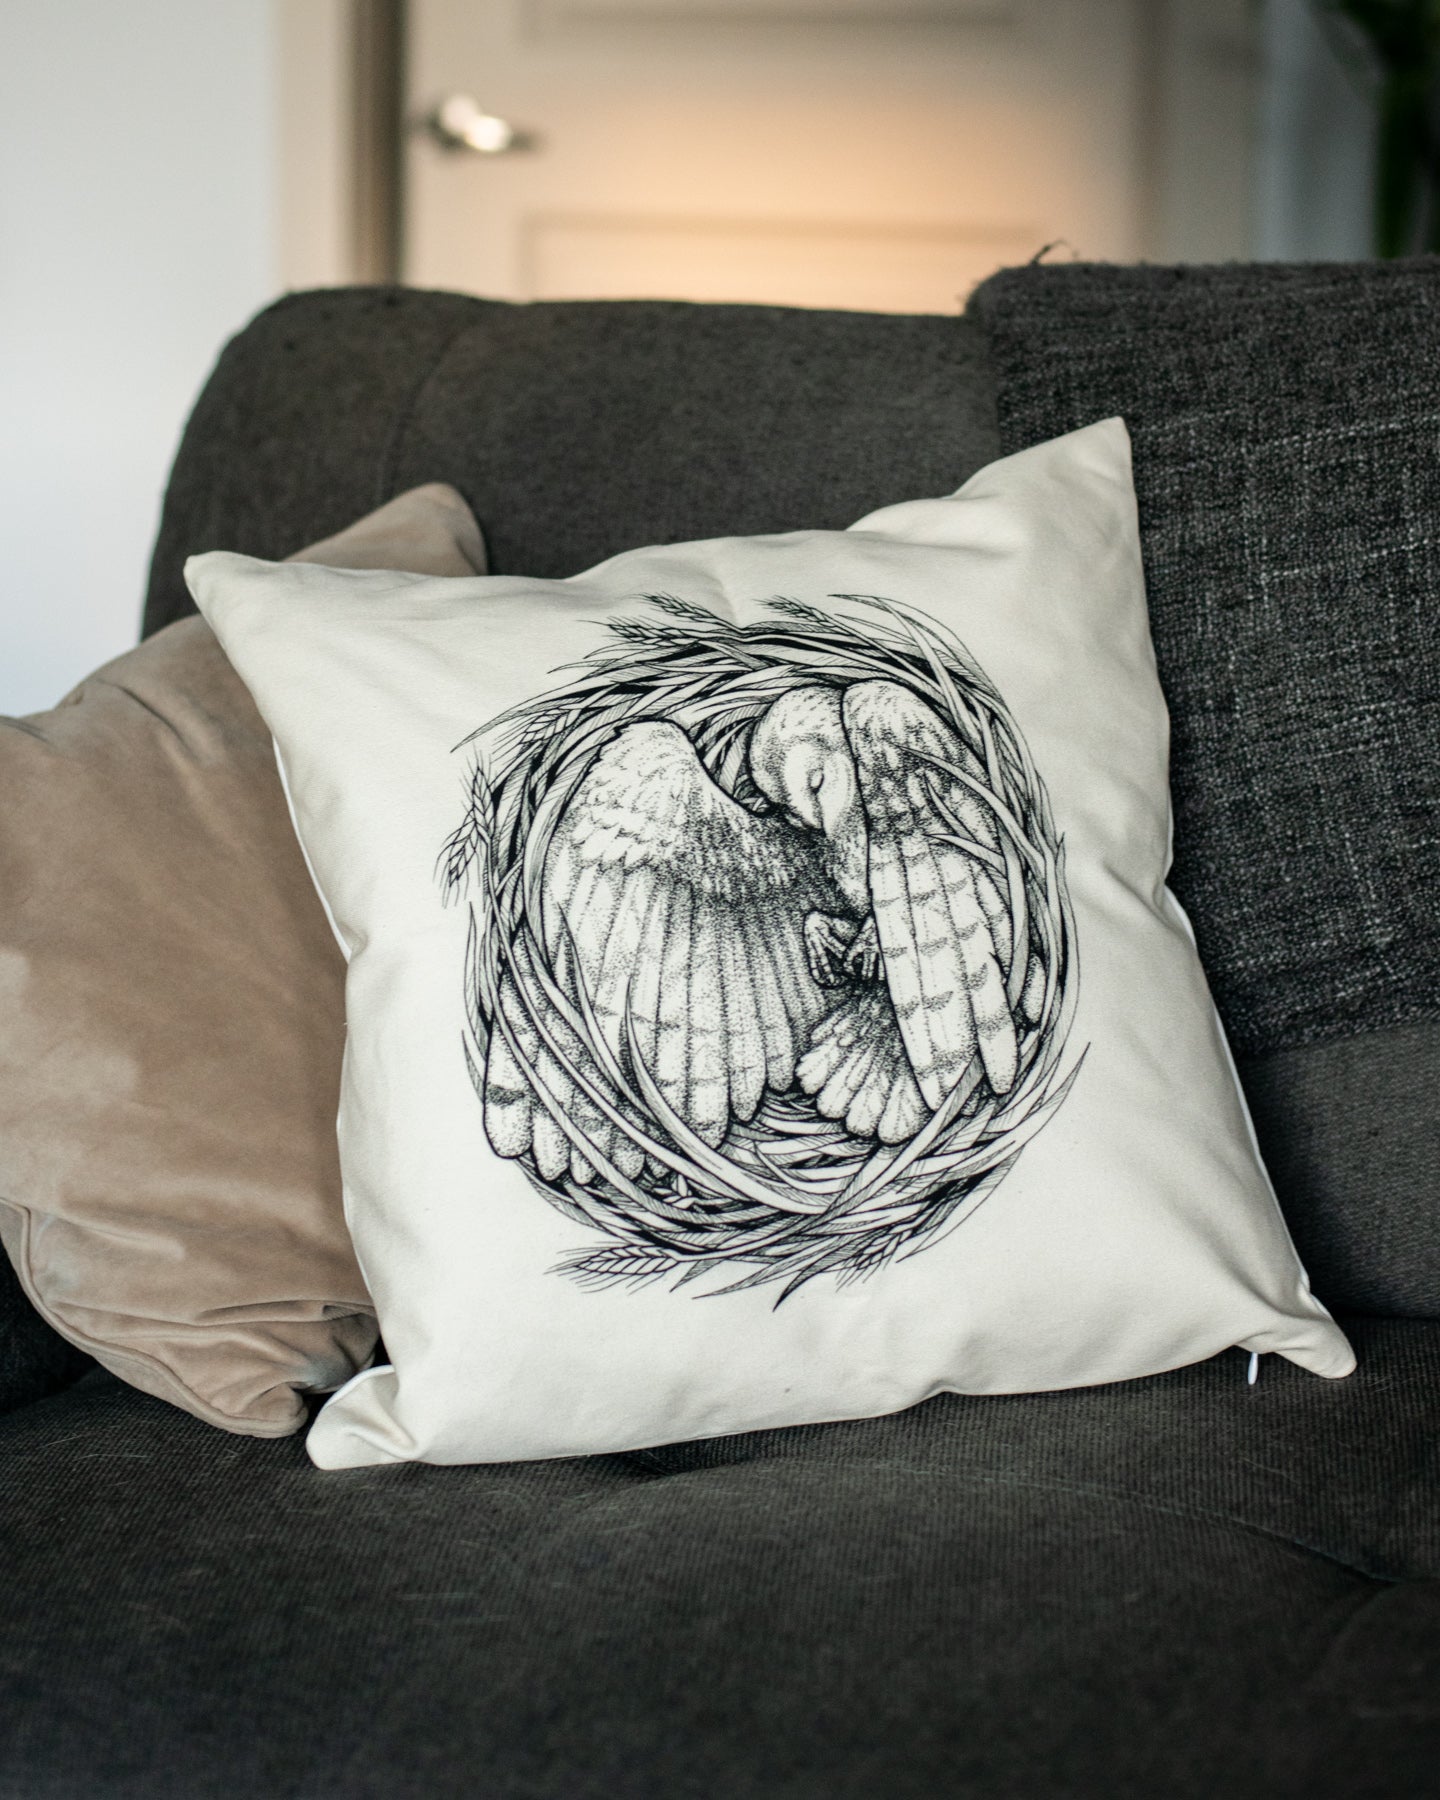 Nesting Owl Pillow - in studio